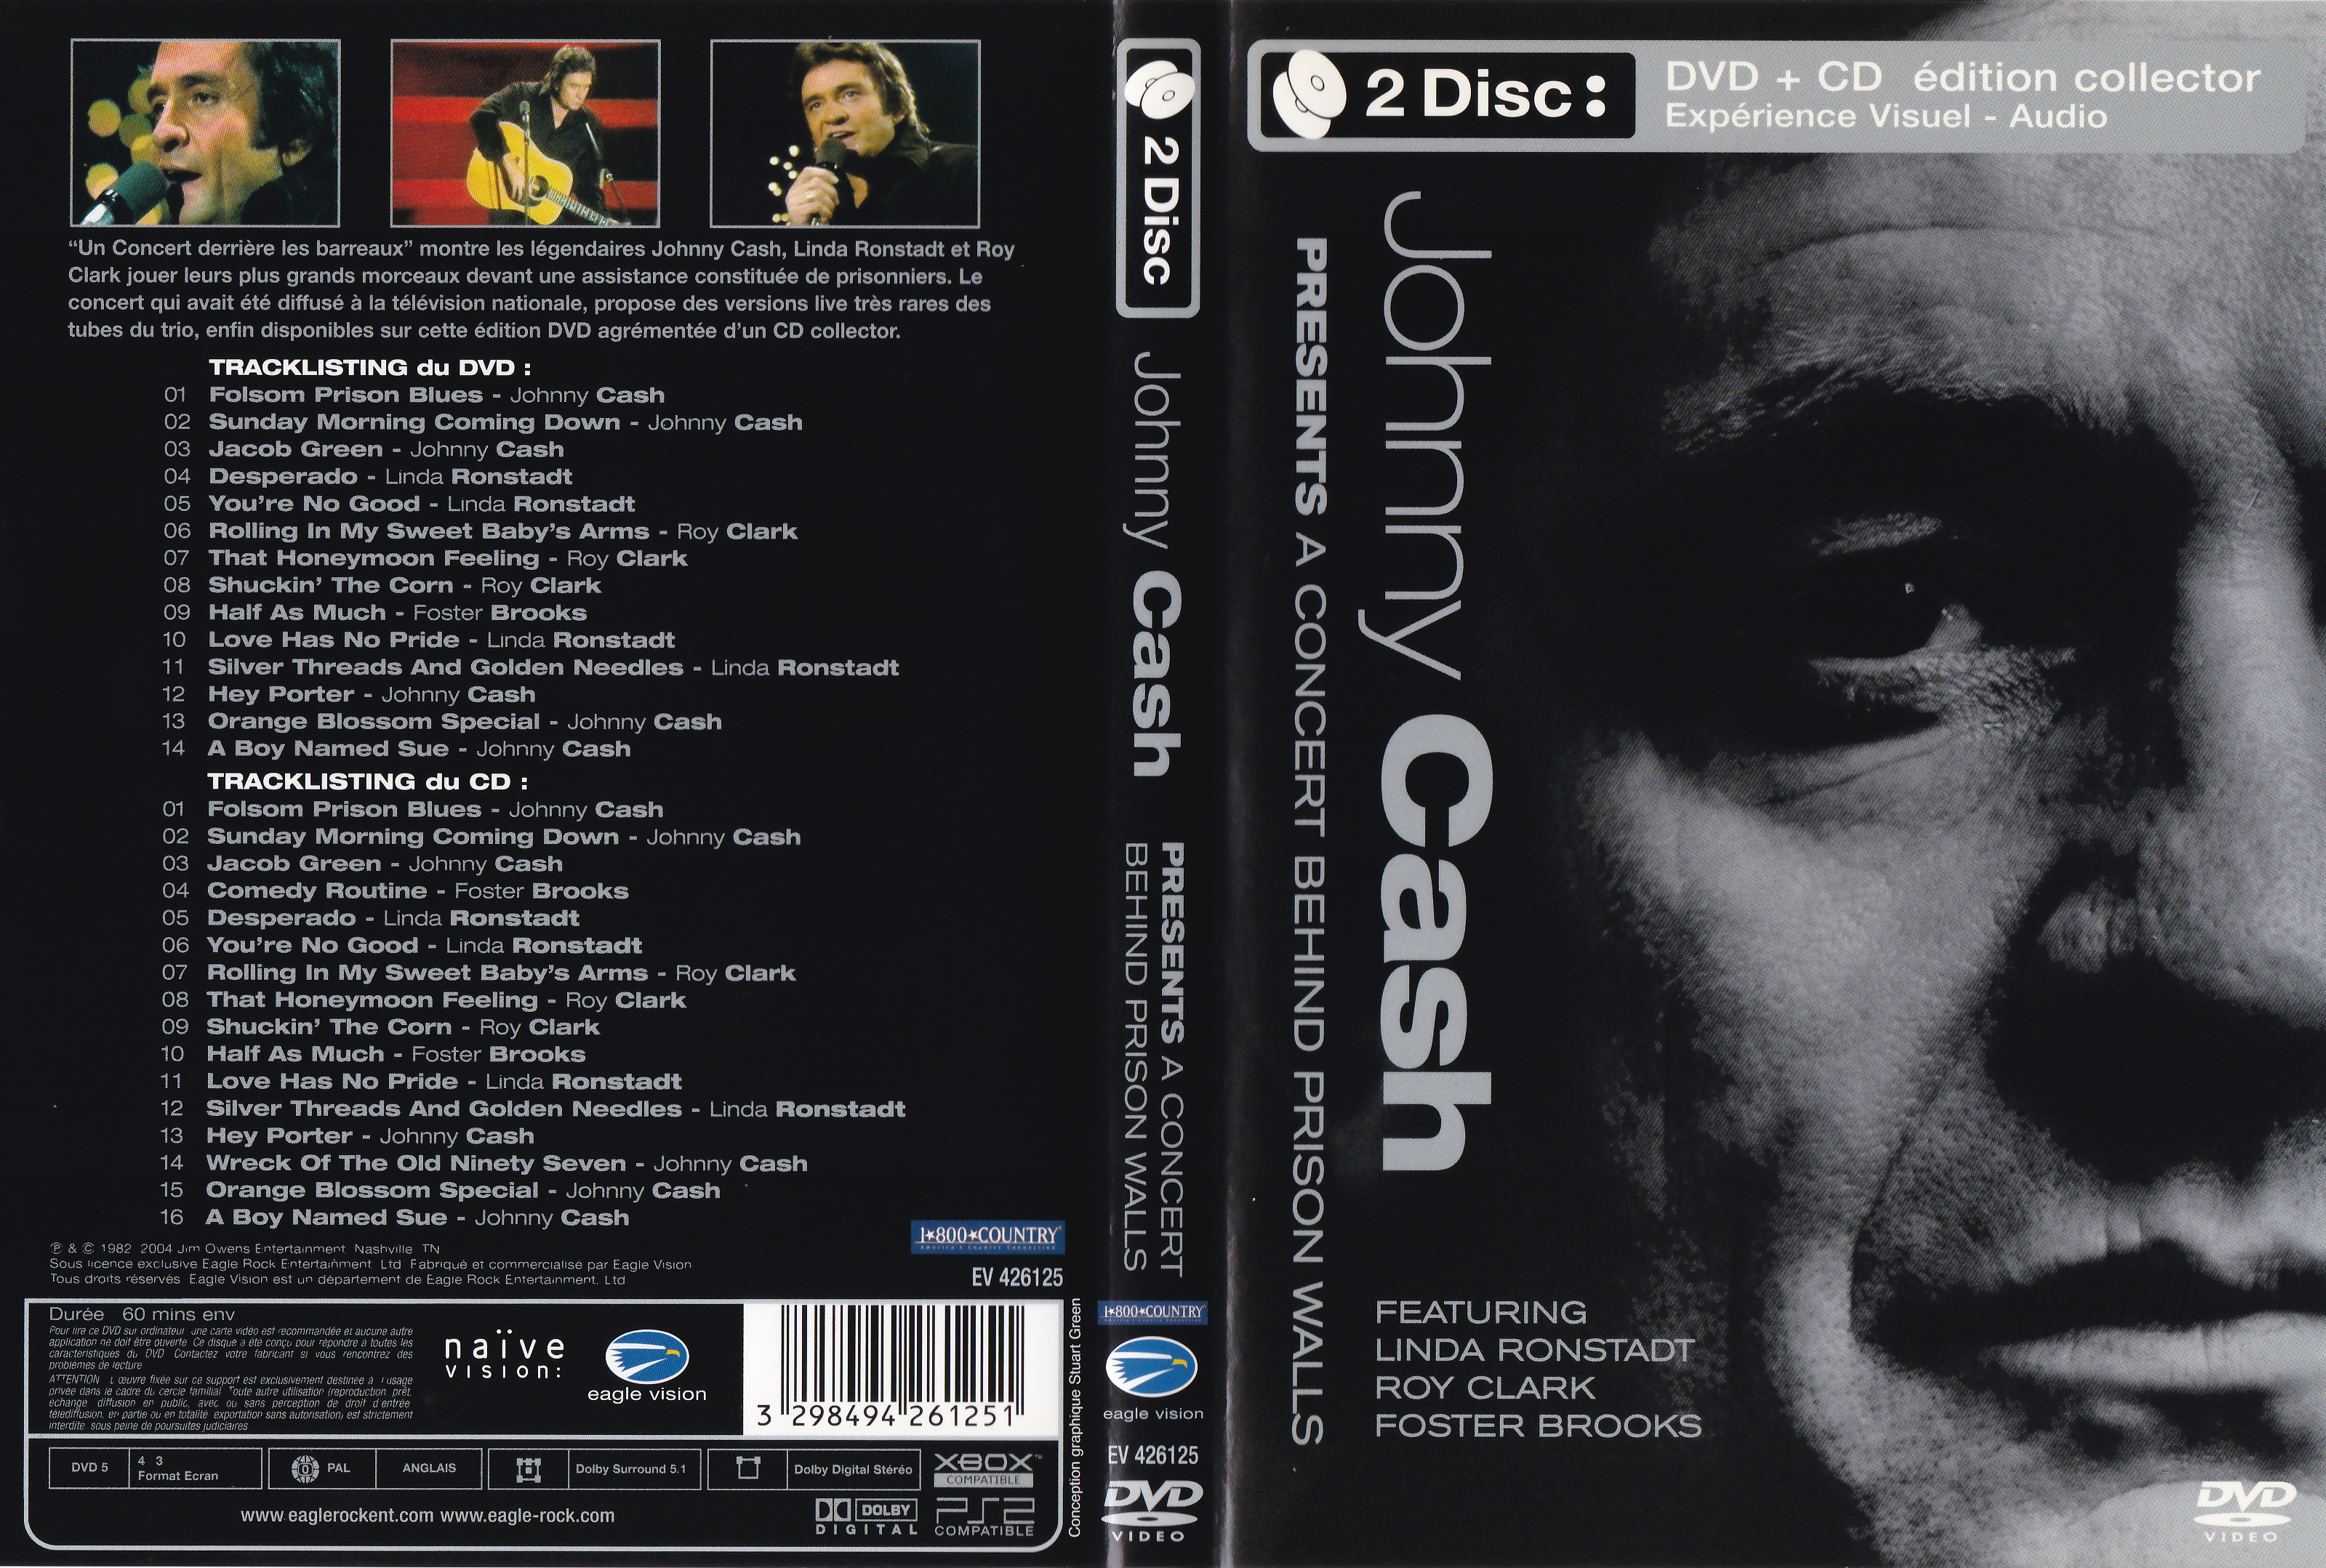 Jaquette DVD Johnny Cash Concert Behind The Walls 